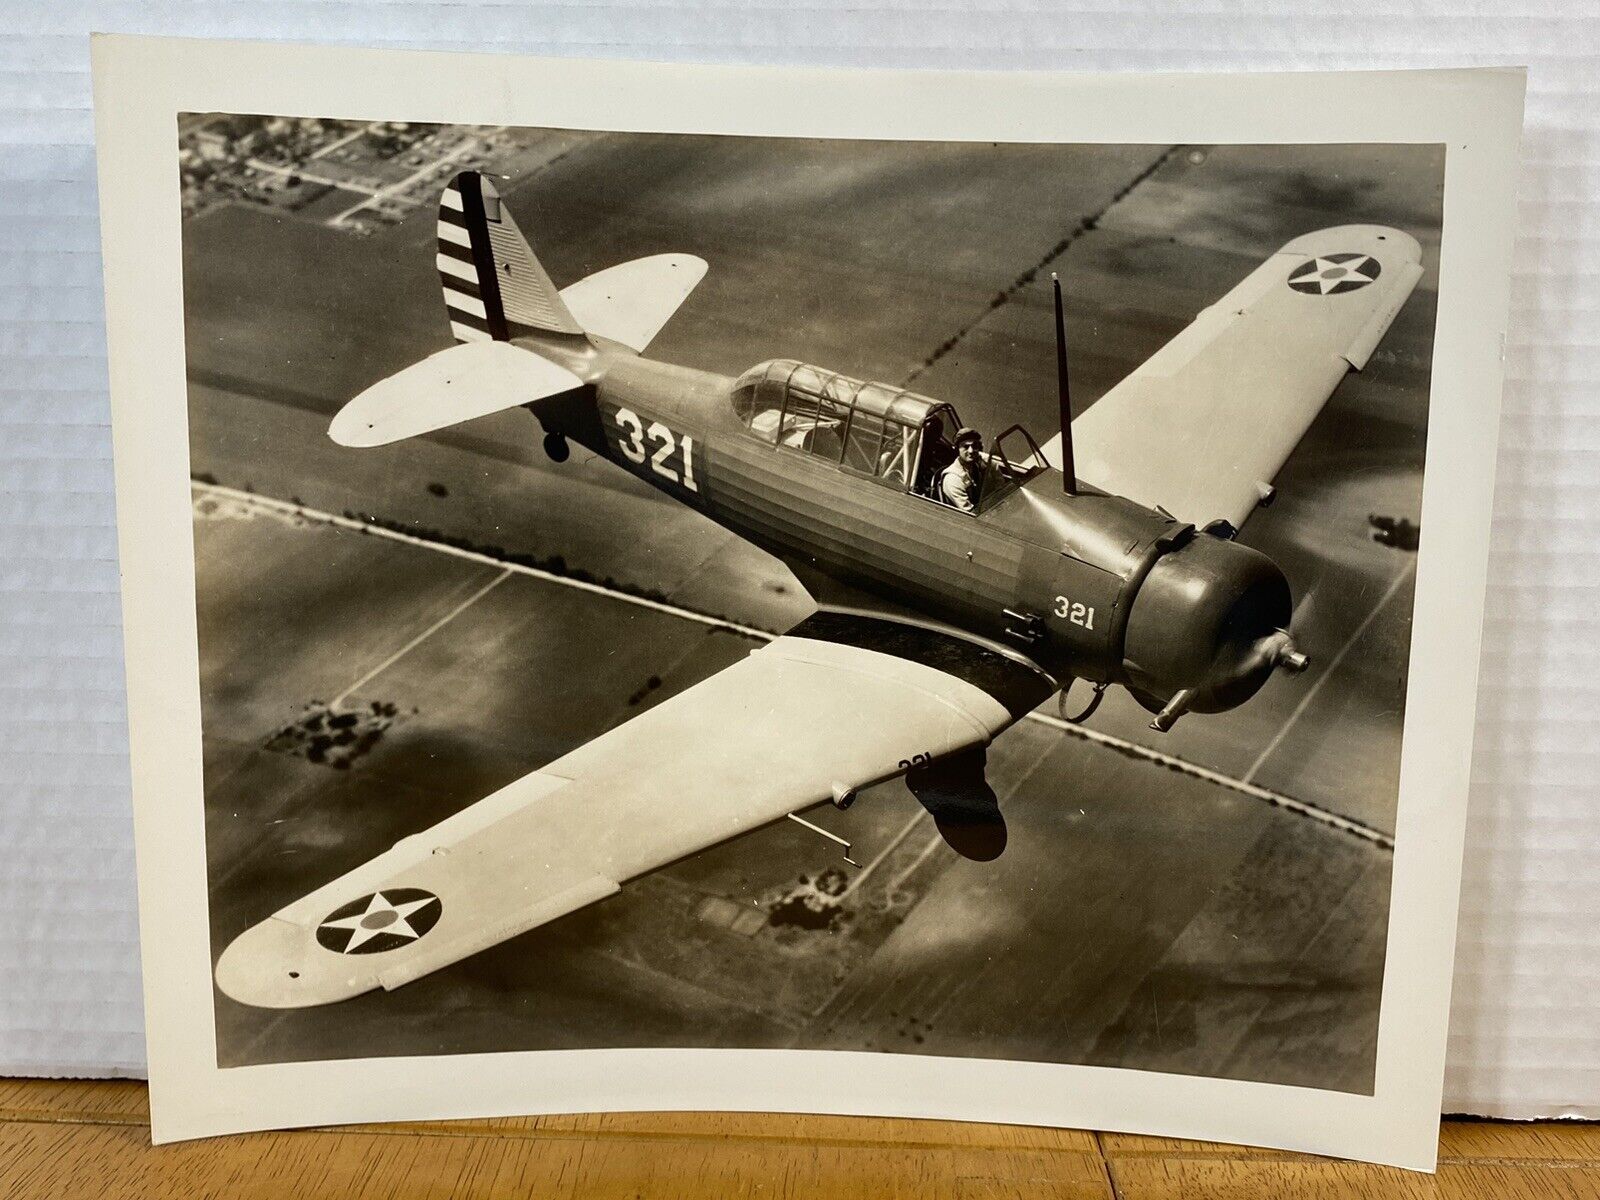 North American BT-9 USAAC World War II single engine monoplane trainer aircraft